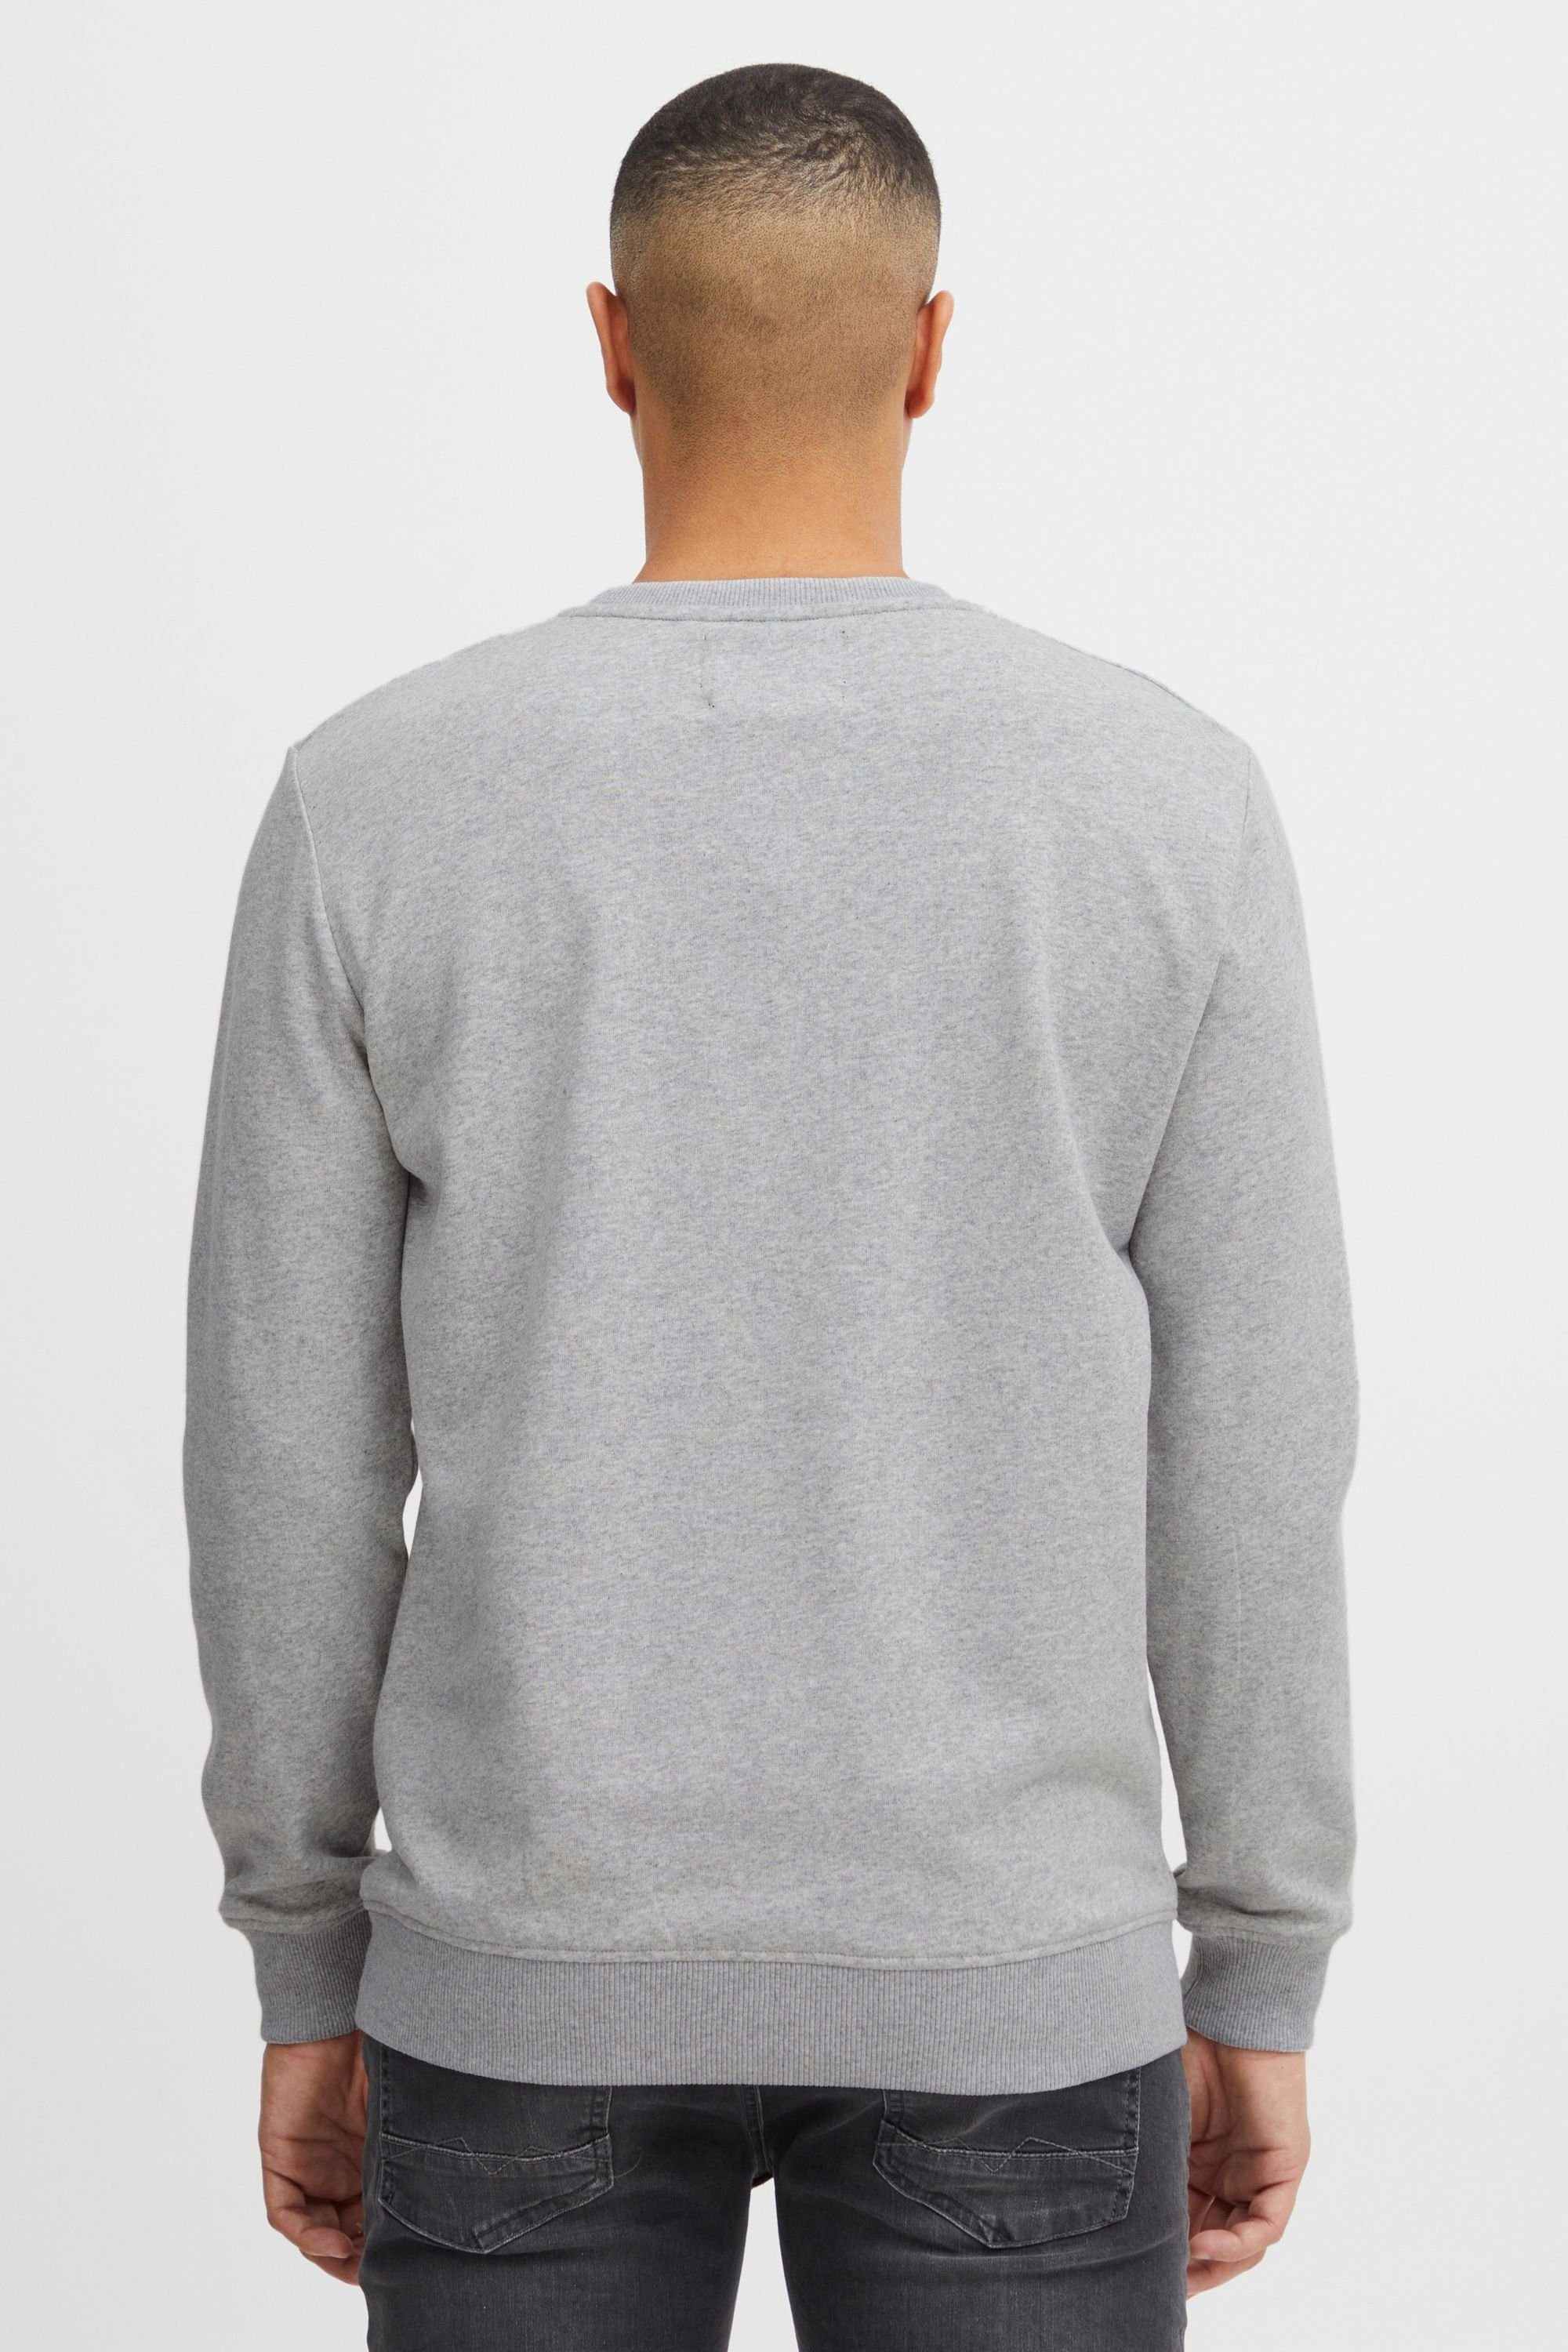 (913) 55582MM Indicode IDForz Light Mix Sweatshirt Grey